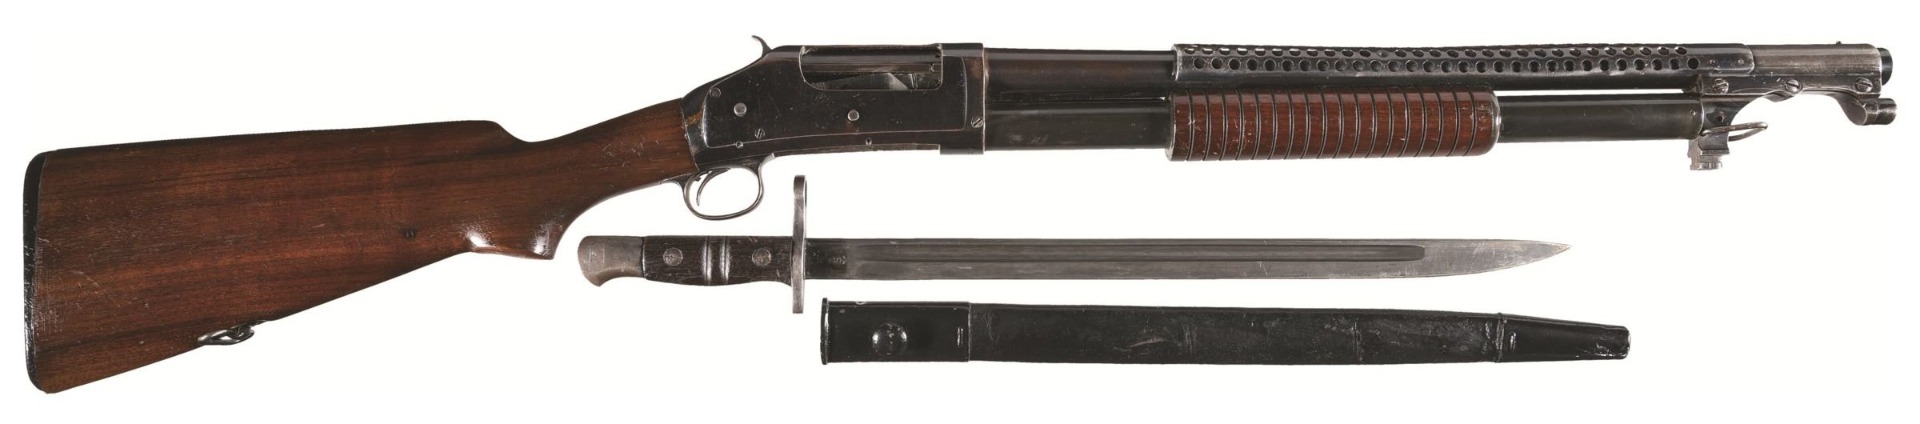 Winchester model 97 trench gun